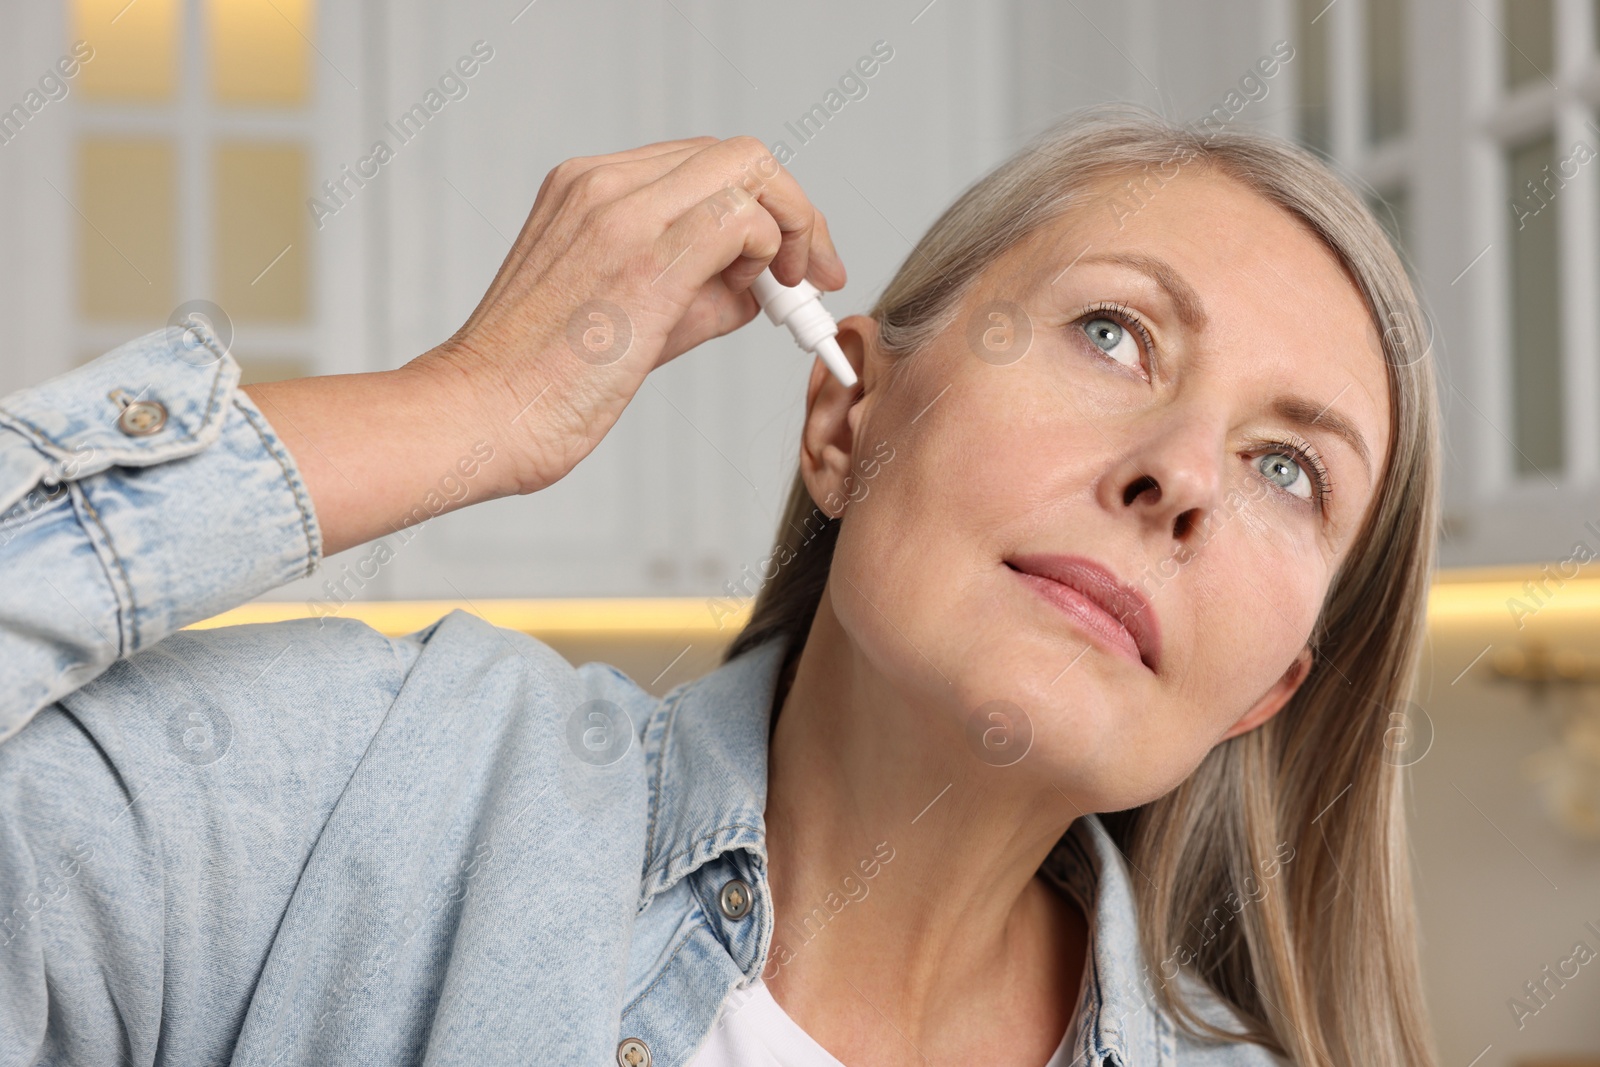 Photo of Woman applying medical ear drops at home